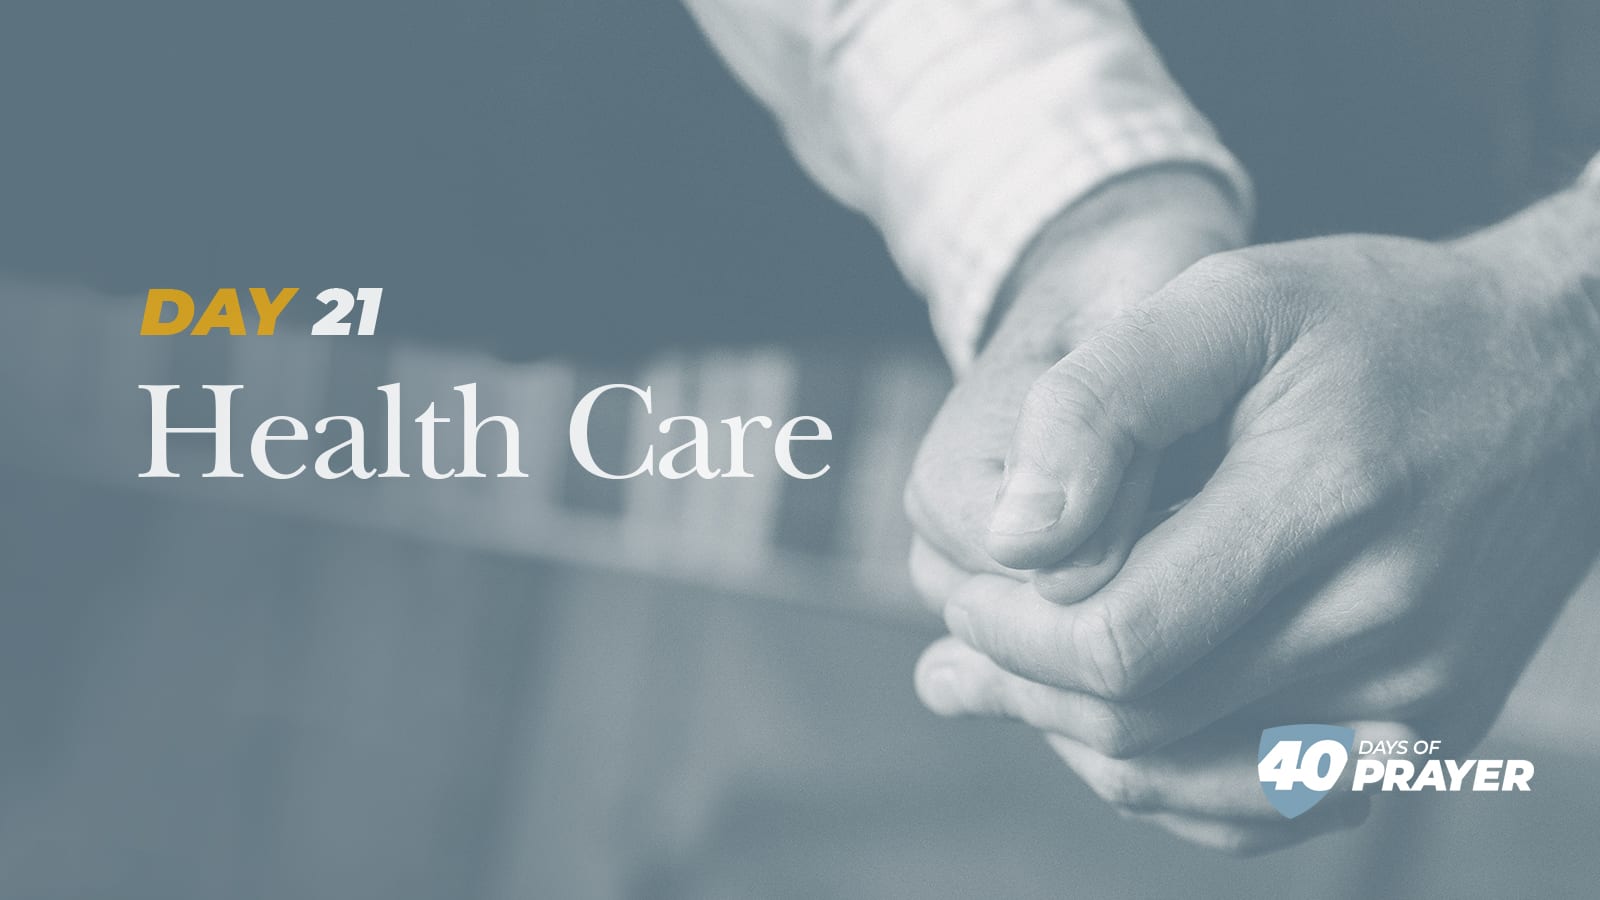 40 days of Prayer Day 21: Health Care